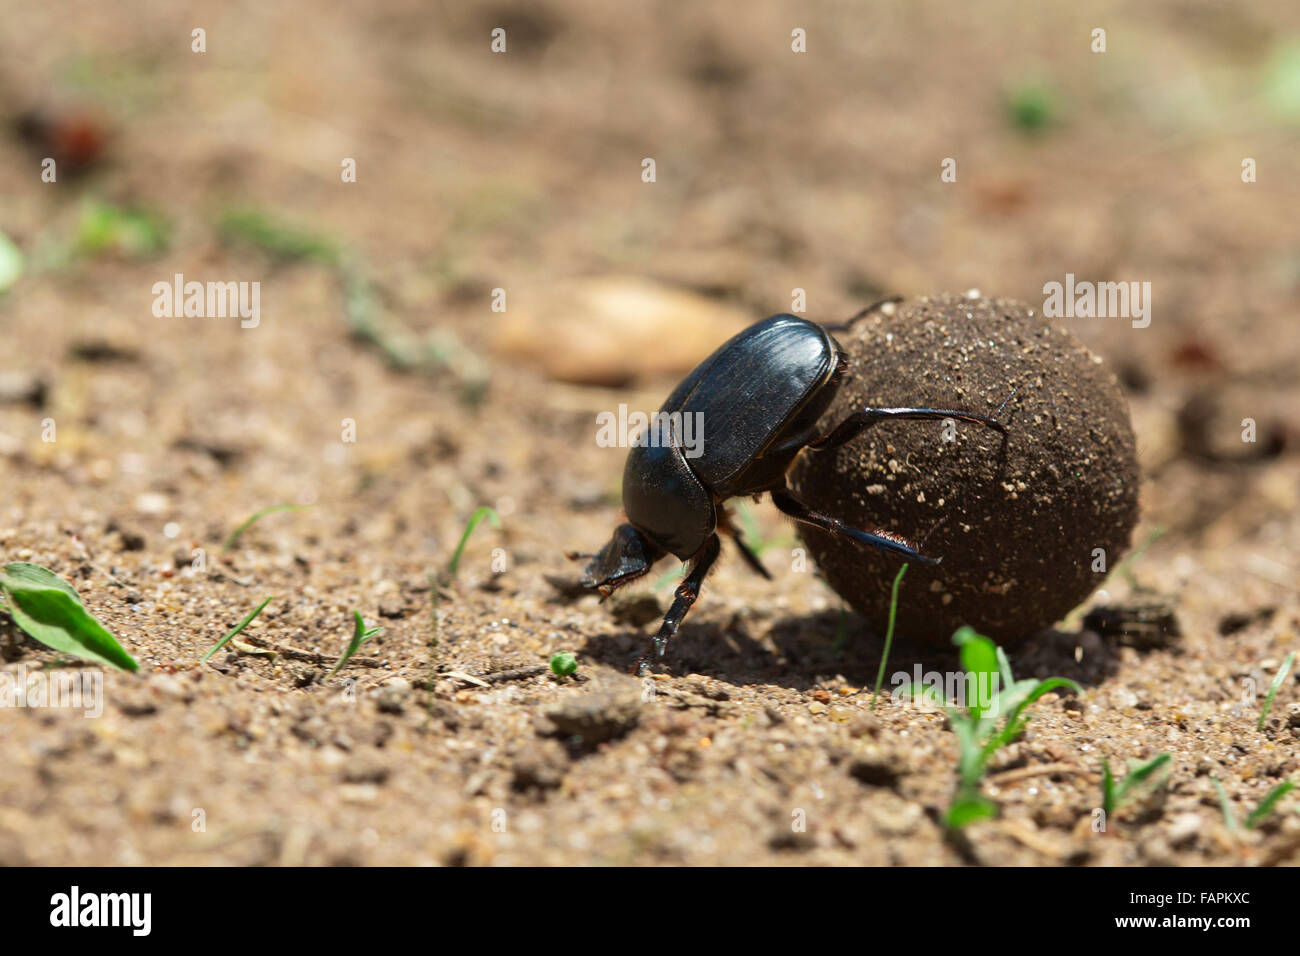 Dung beetle rolling dung Family: Scarabaeidae Malawi  November 2012 Stock Photo